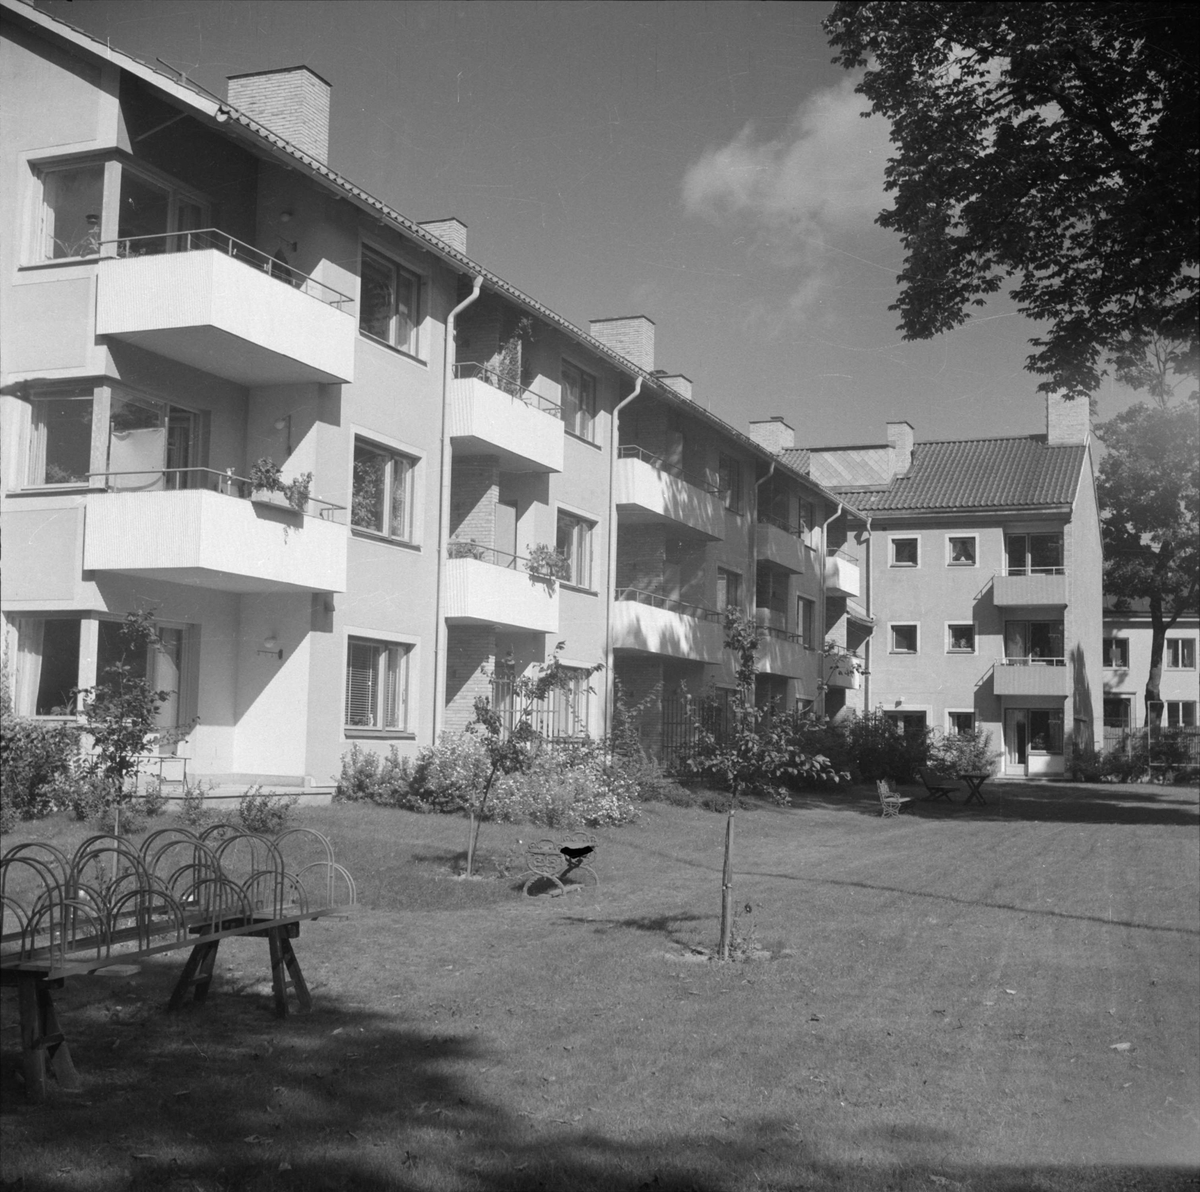 Flerfamiljshus, sannolikt Uppsala